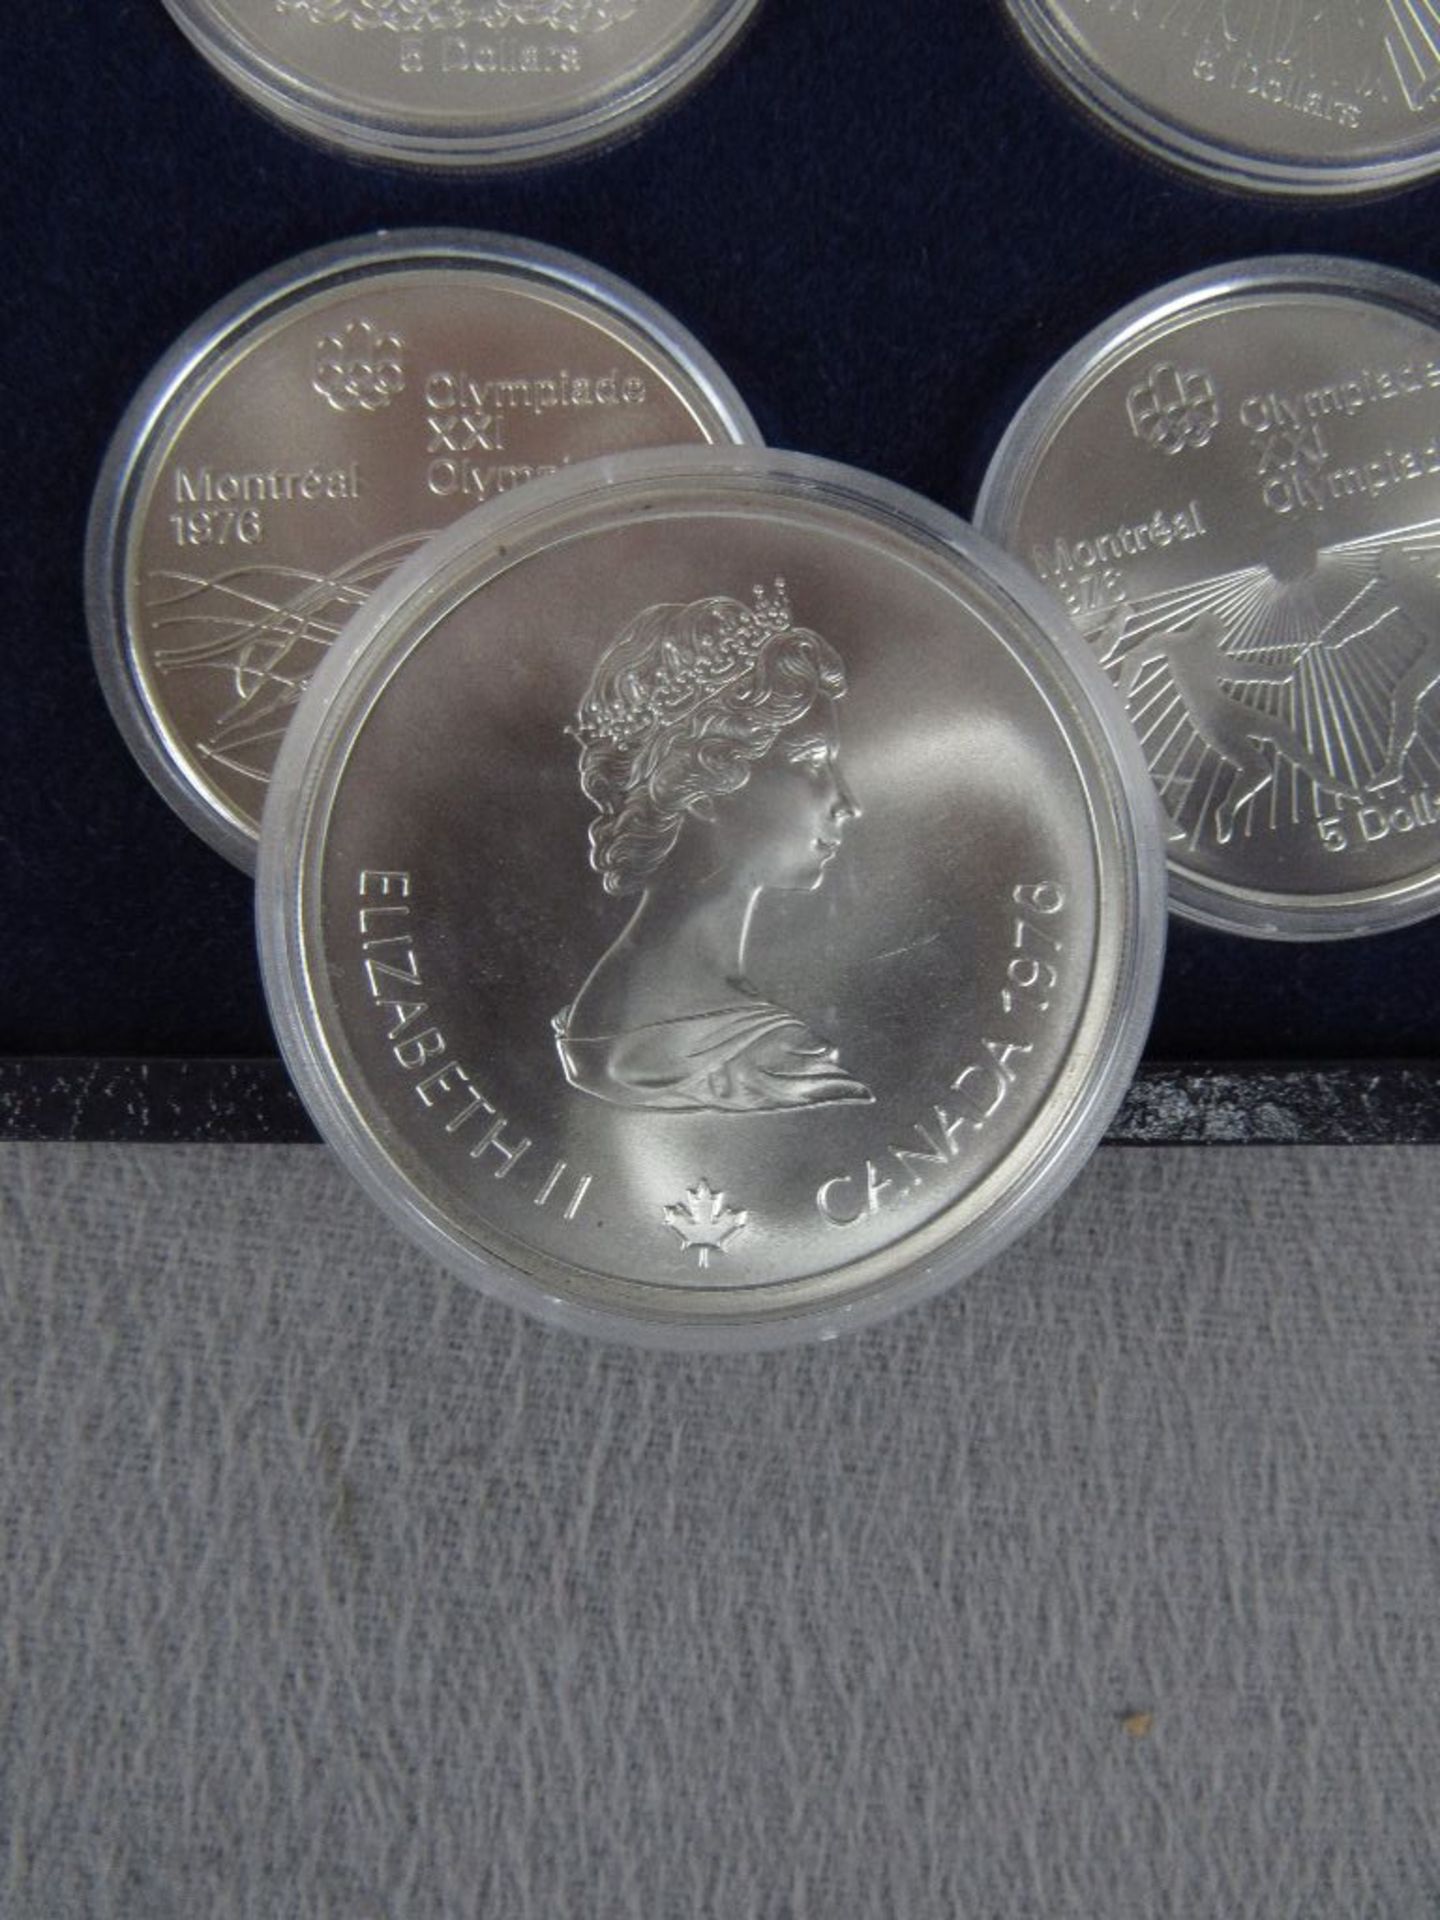 Canada Silbermünzen Olympia 1976 komplett - Bild 4 aus 5